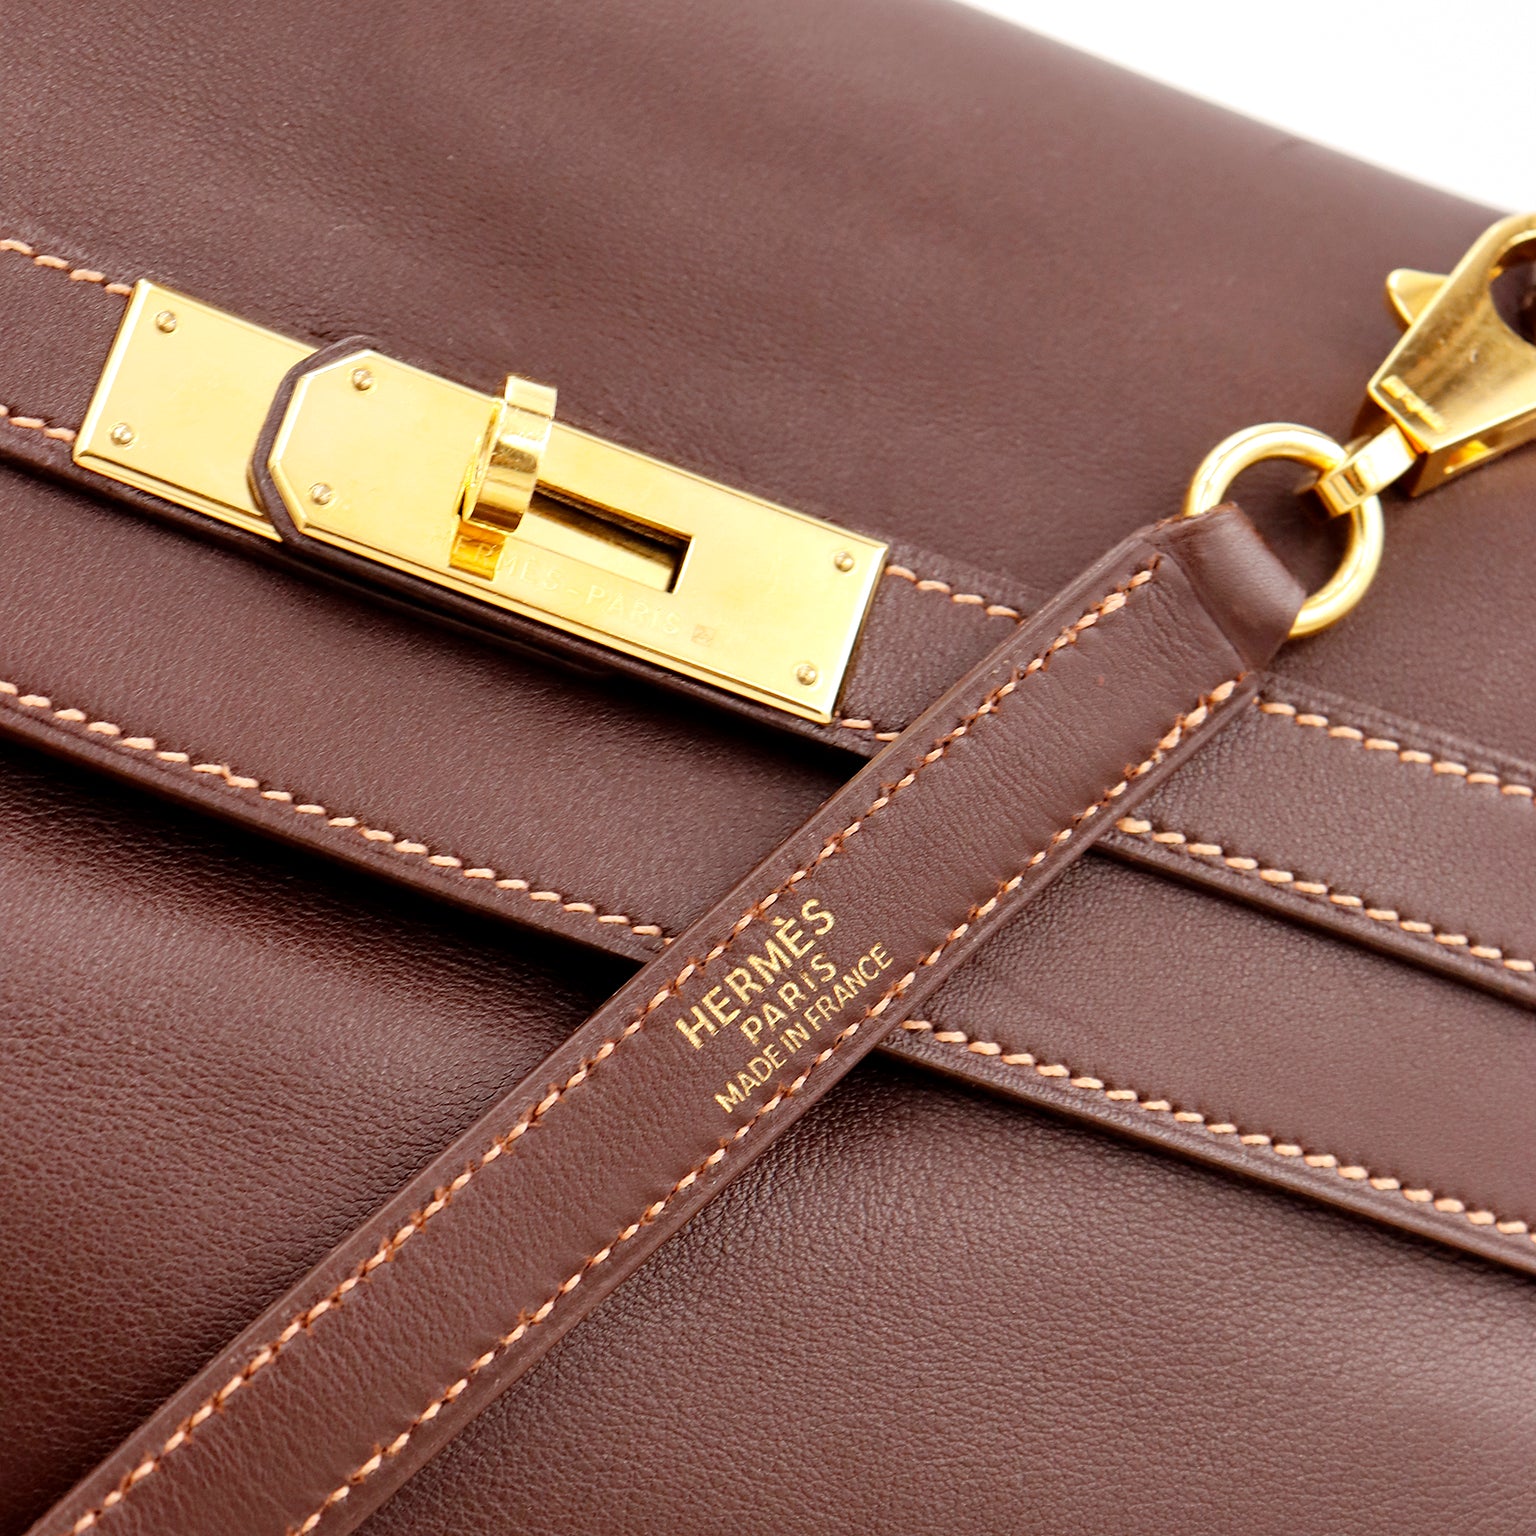 Hermes birkin 35 cm Box Calf Leather Hot Pink Gold Hardware